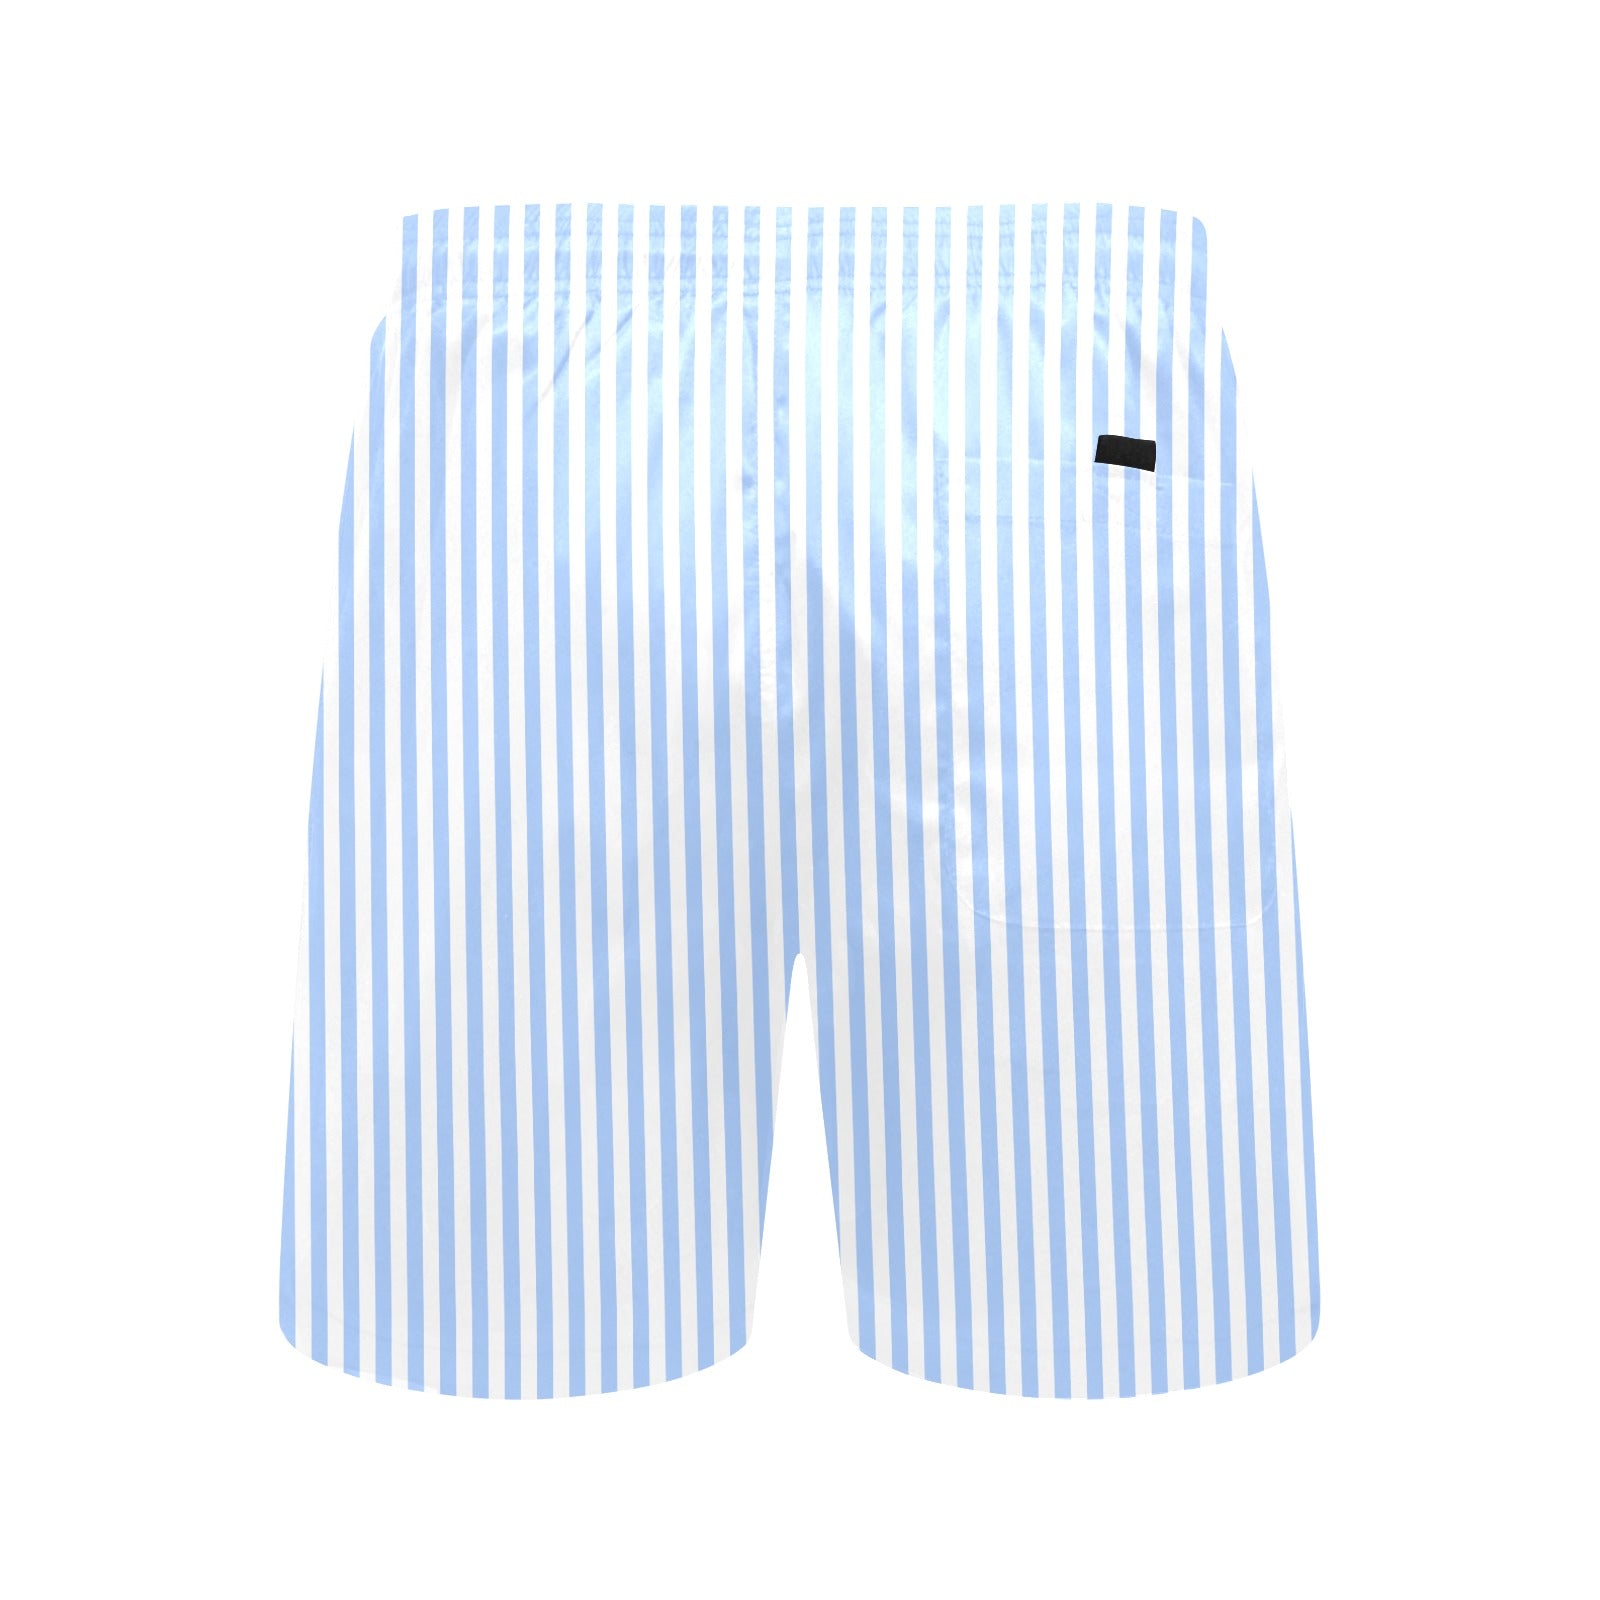 Blue White Striped Men Swim Trunks, Mid Length Shorts Beach Pockets Mesh Lining Drawstring Boys Casual Bathing Suit Plus Size Swimwear Starcove Fashion